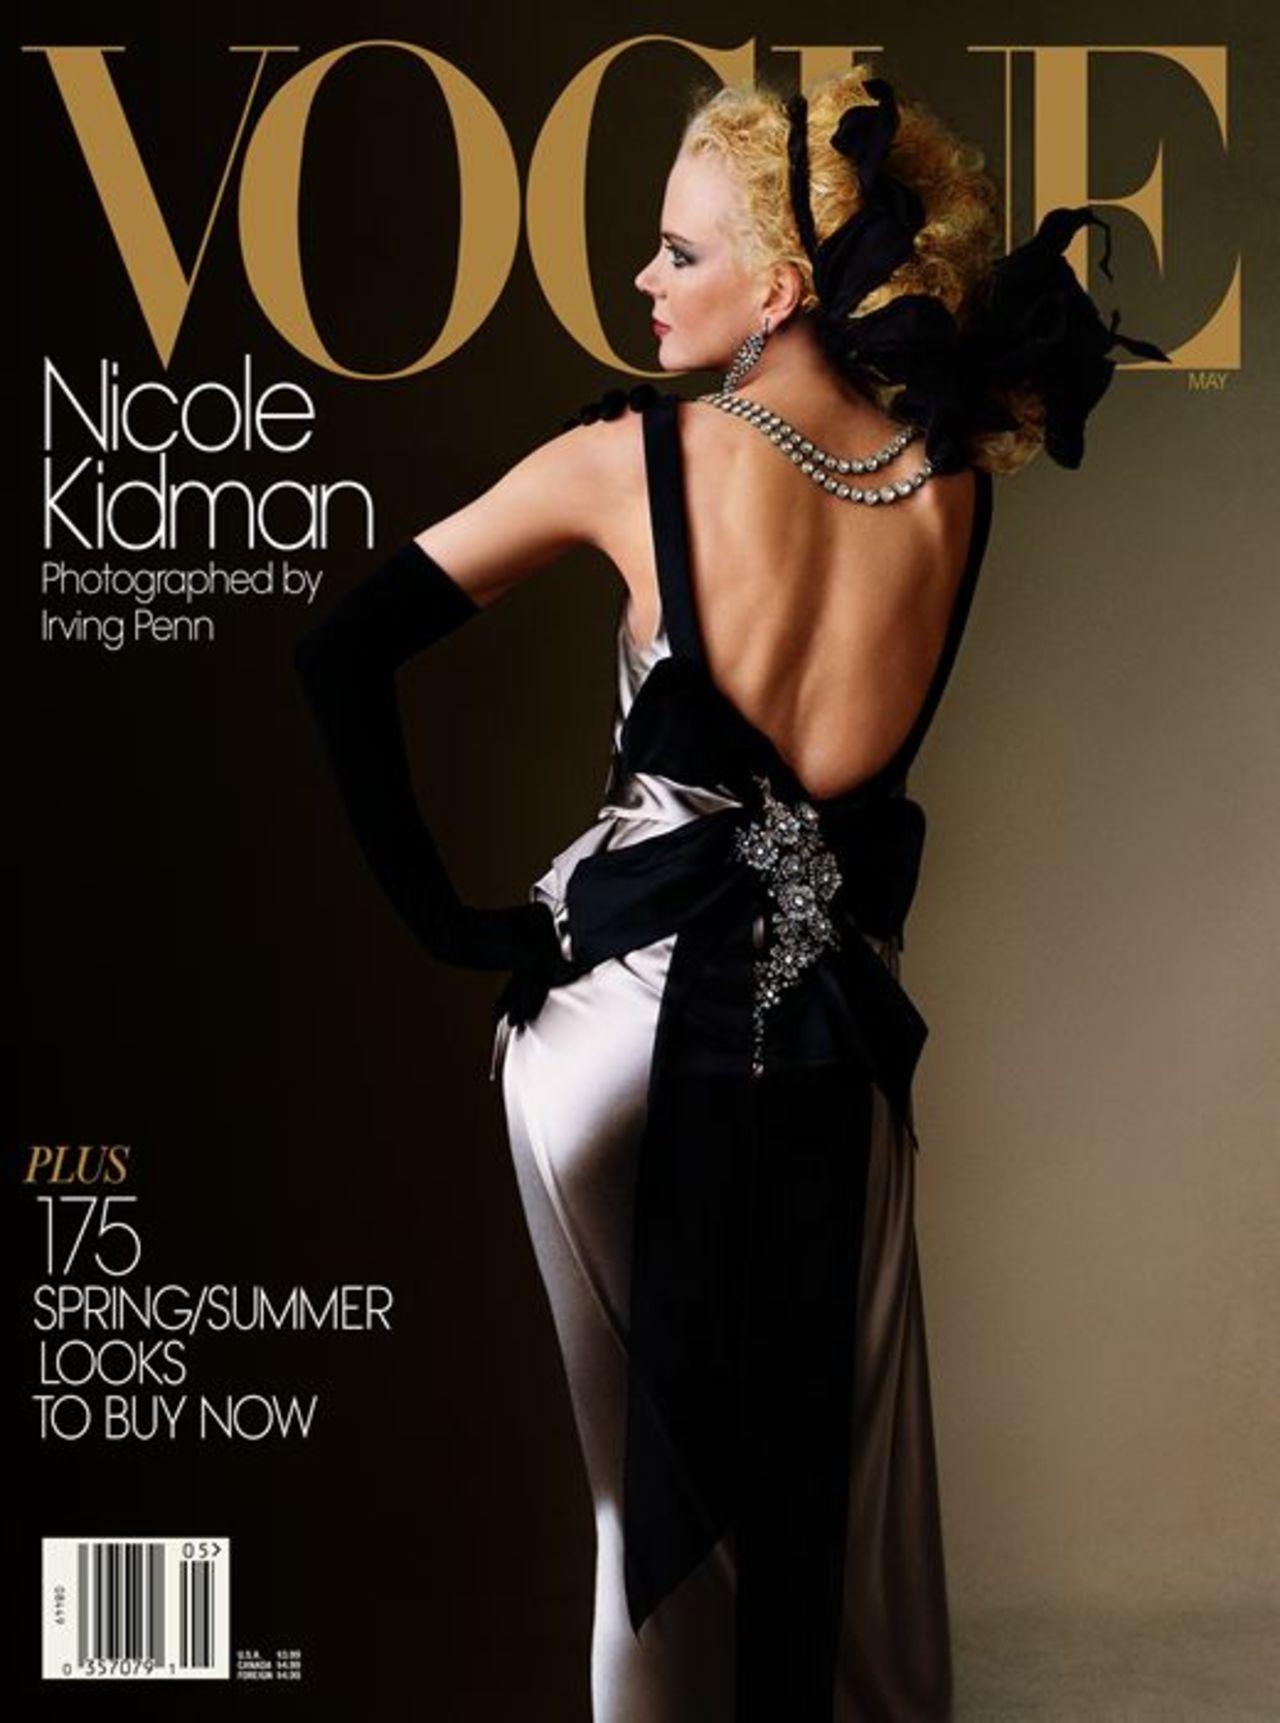 Vogue cover featuring Nicole Kidman, shot by Irving Penn (2004)